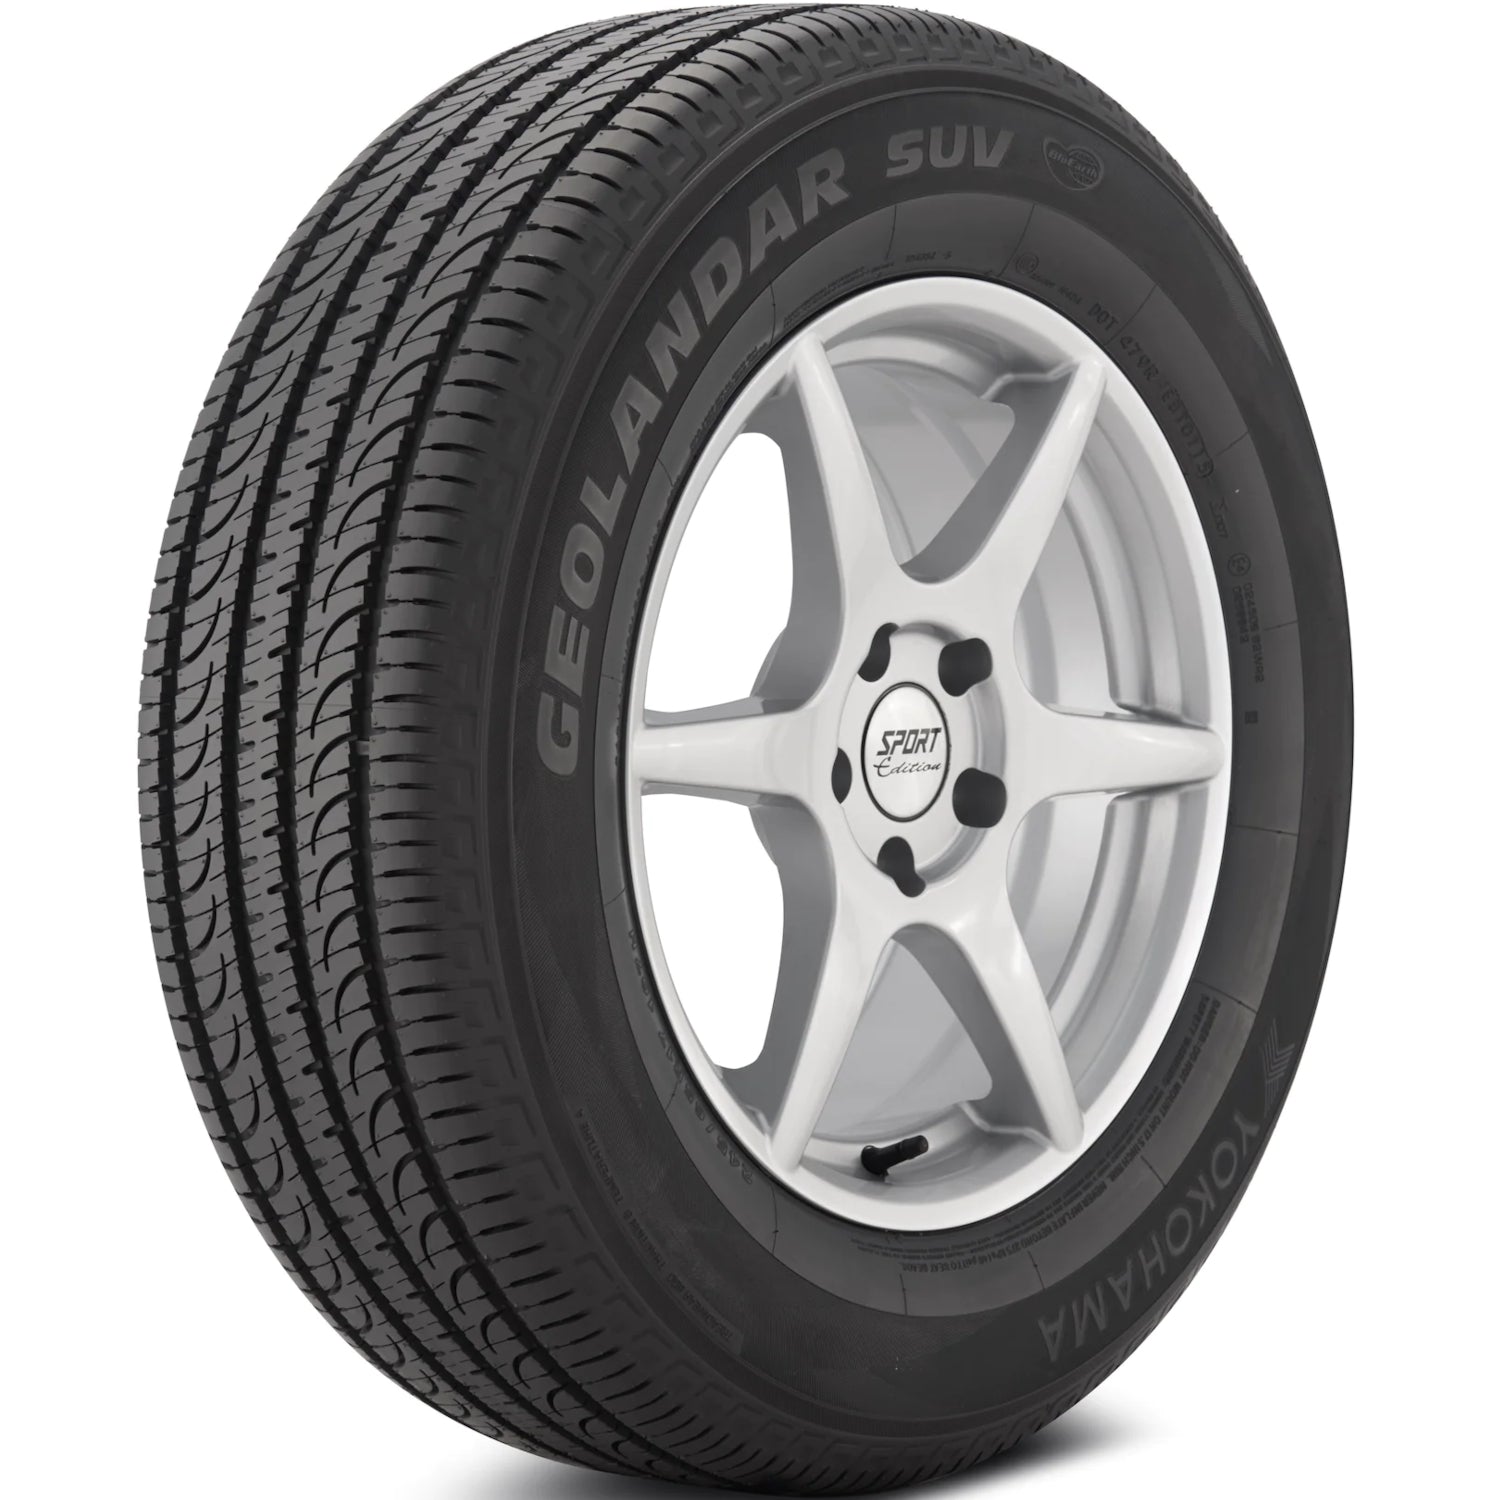 YOKOHAMA GEOLANDAR G055 225/70R16 (28.2X8.8R 16) Tires